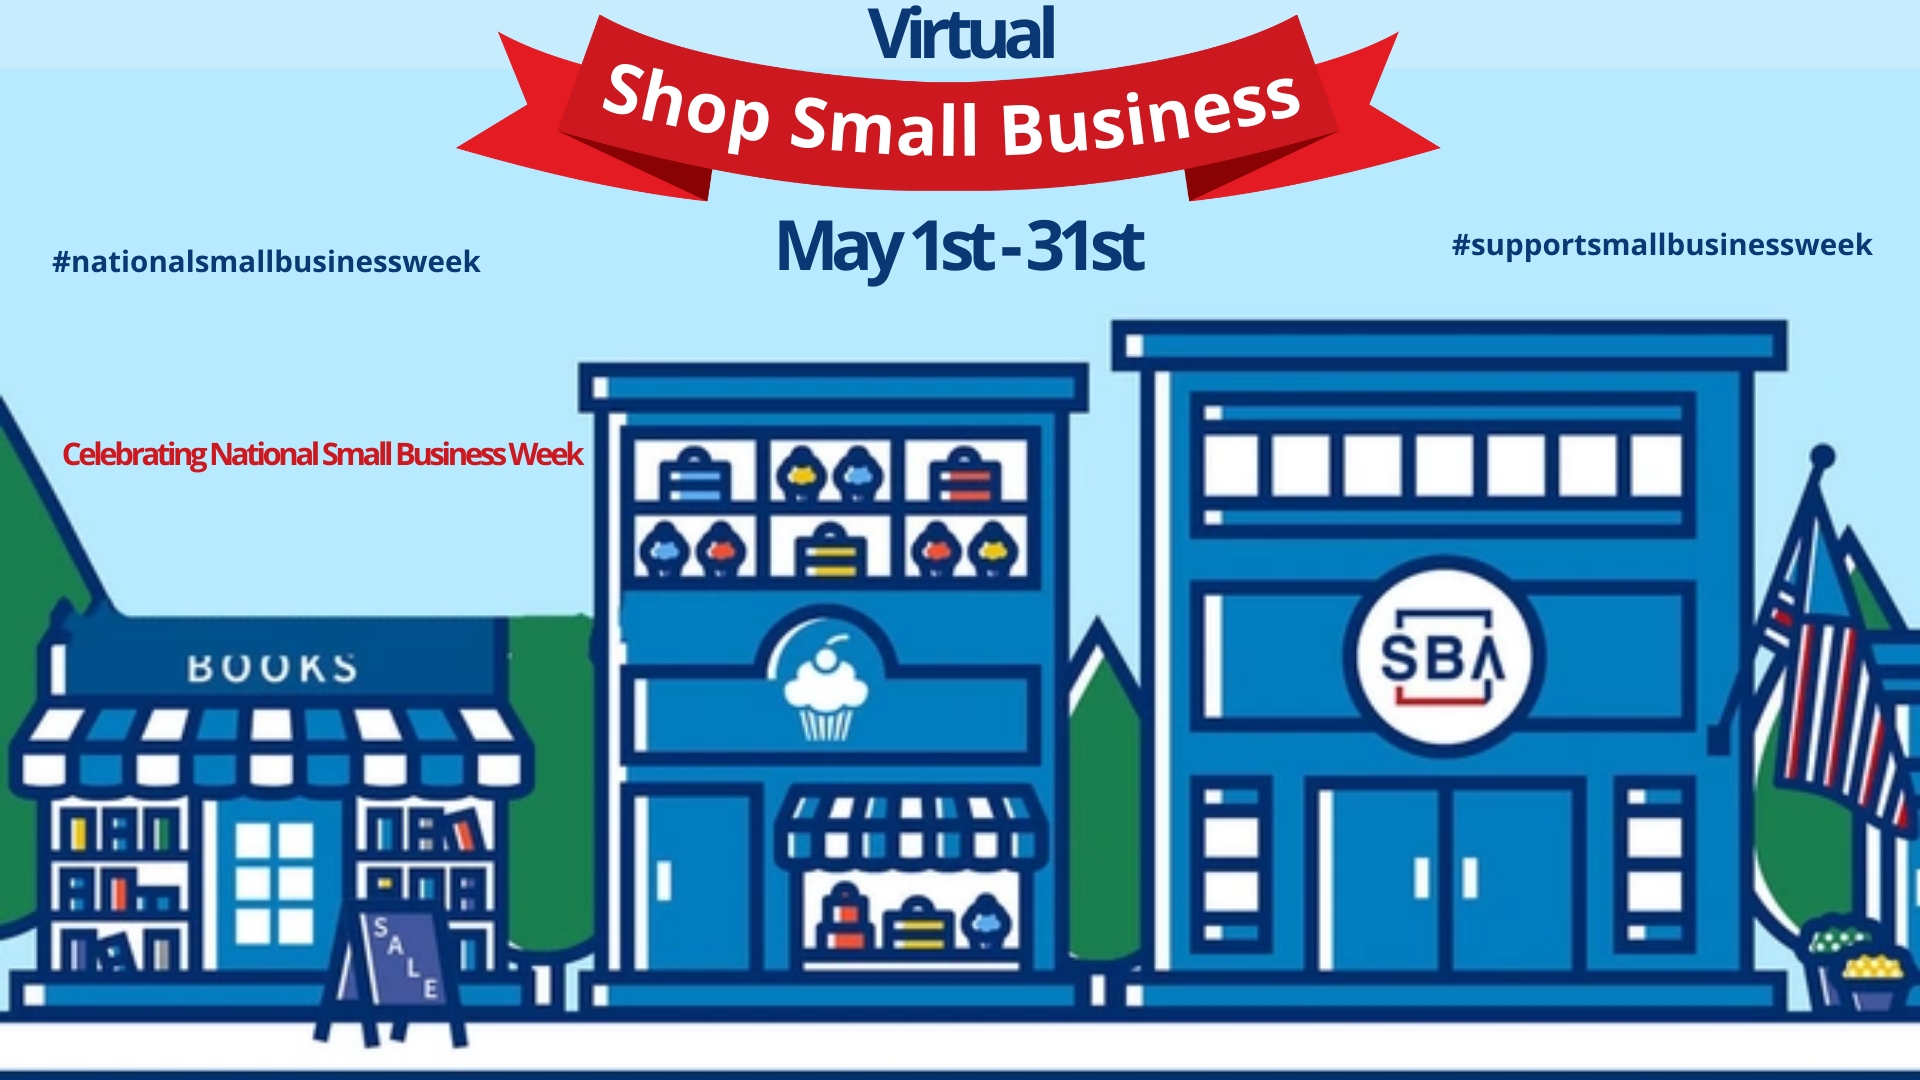 Virtual Shop Small Business Week